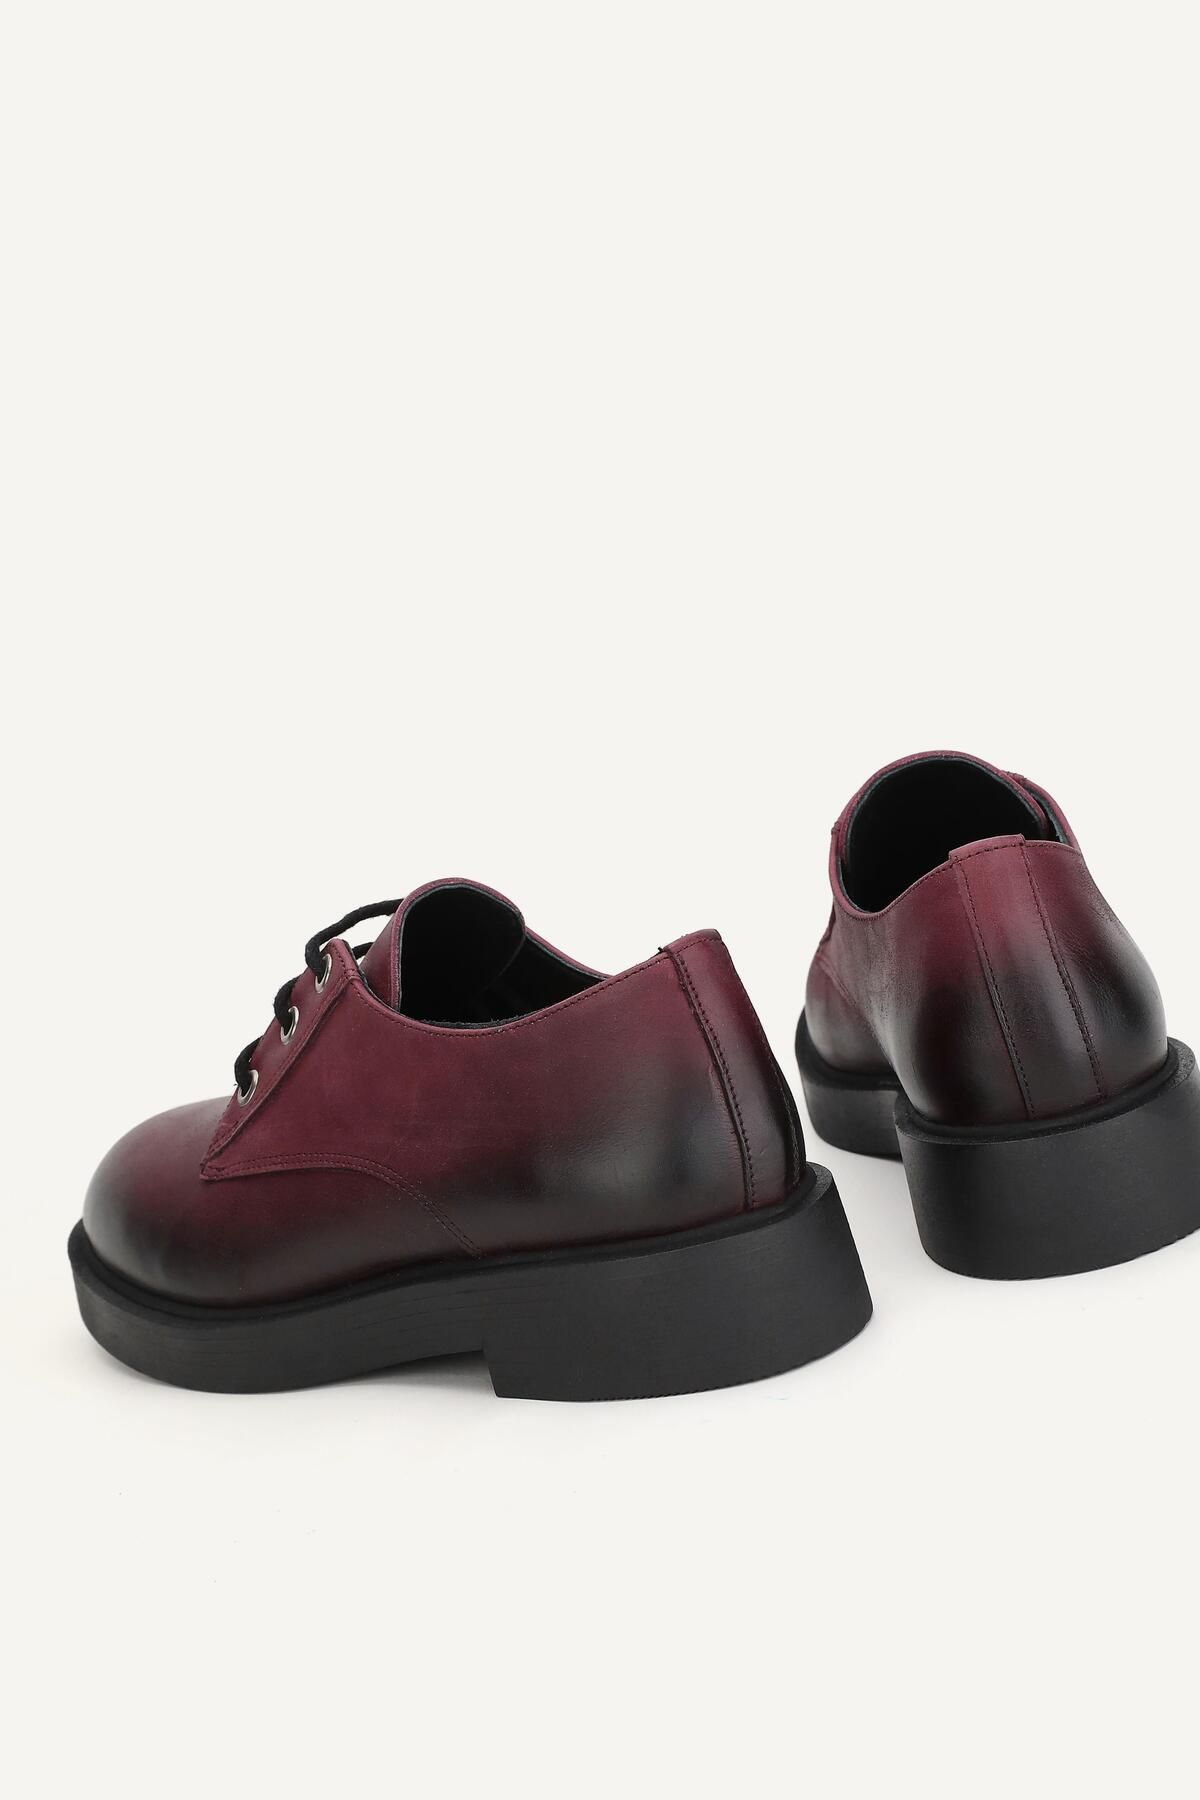 TUNAELLİ کفش زنانه CLARET RED چرم طبیعی آکسفورد شماره 36-41